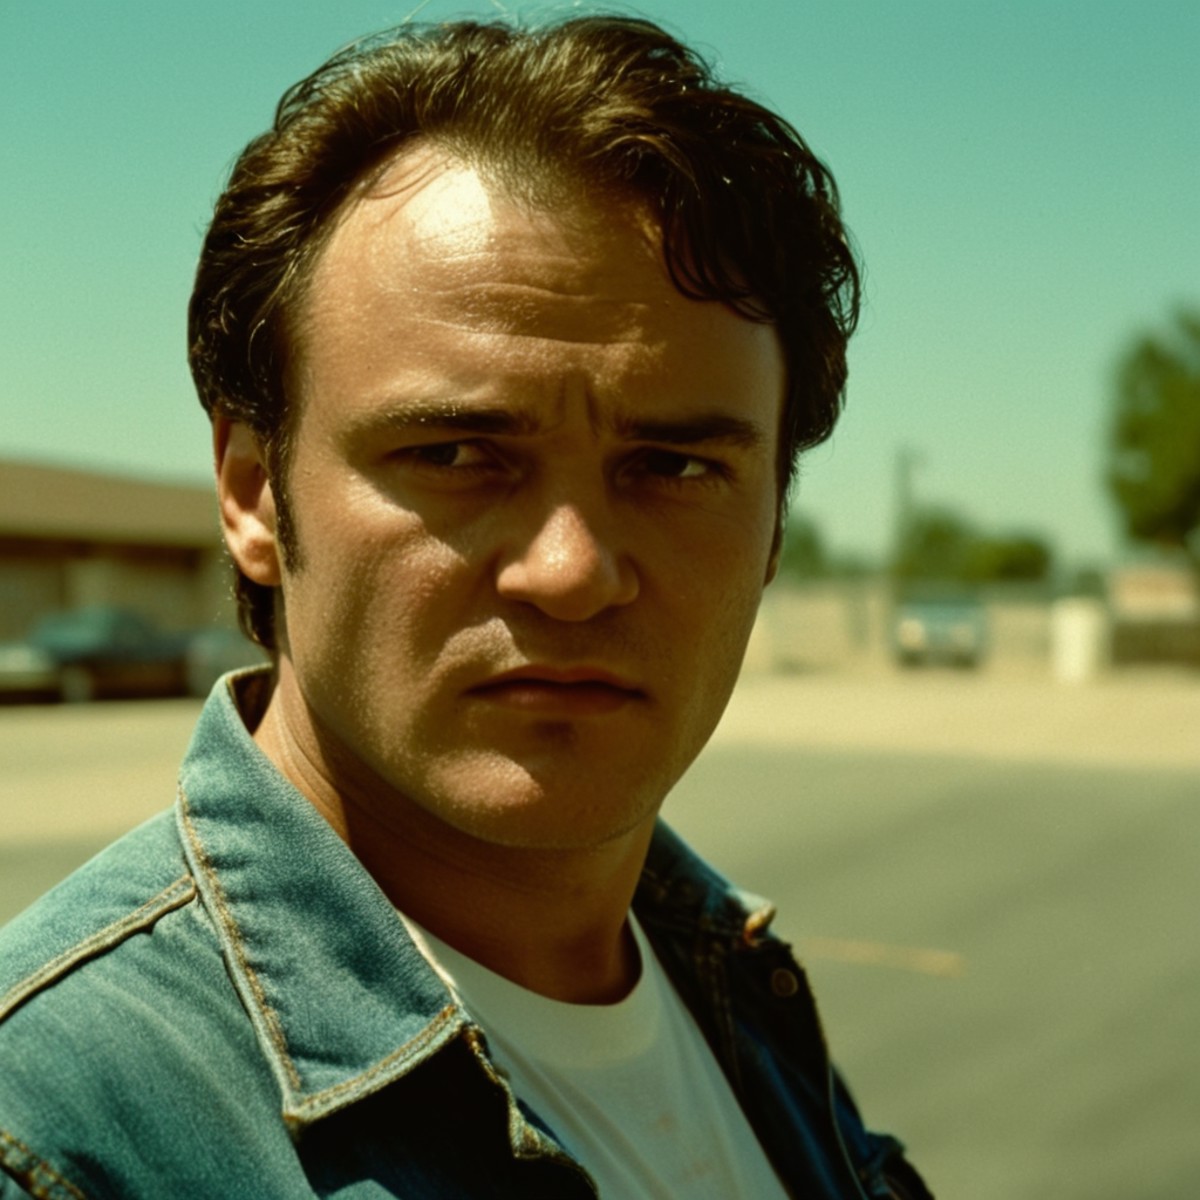 cinematic film still of  <lora:Reservoir Dogs style:1>
Quentin Tarantino,Cinematic 1992 image focus of Cinematic 1992 imag...